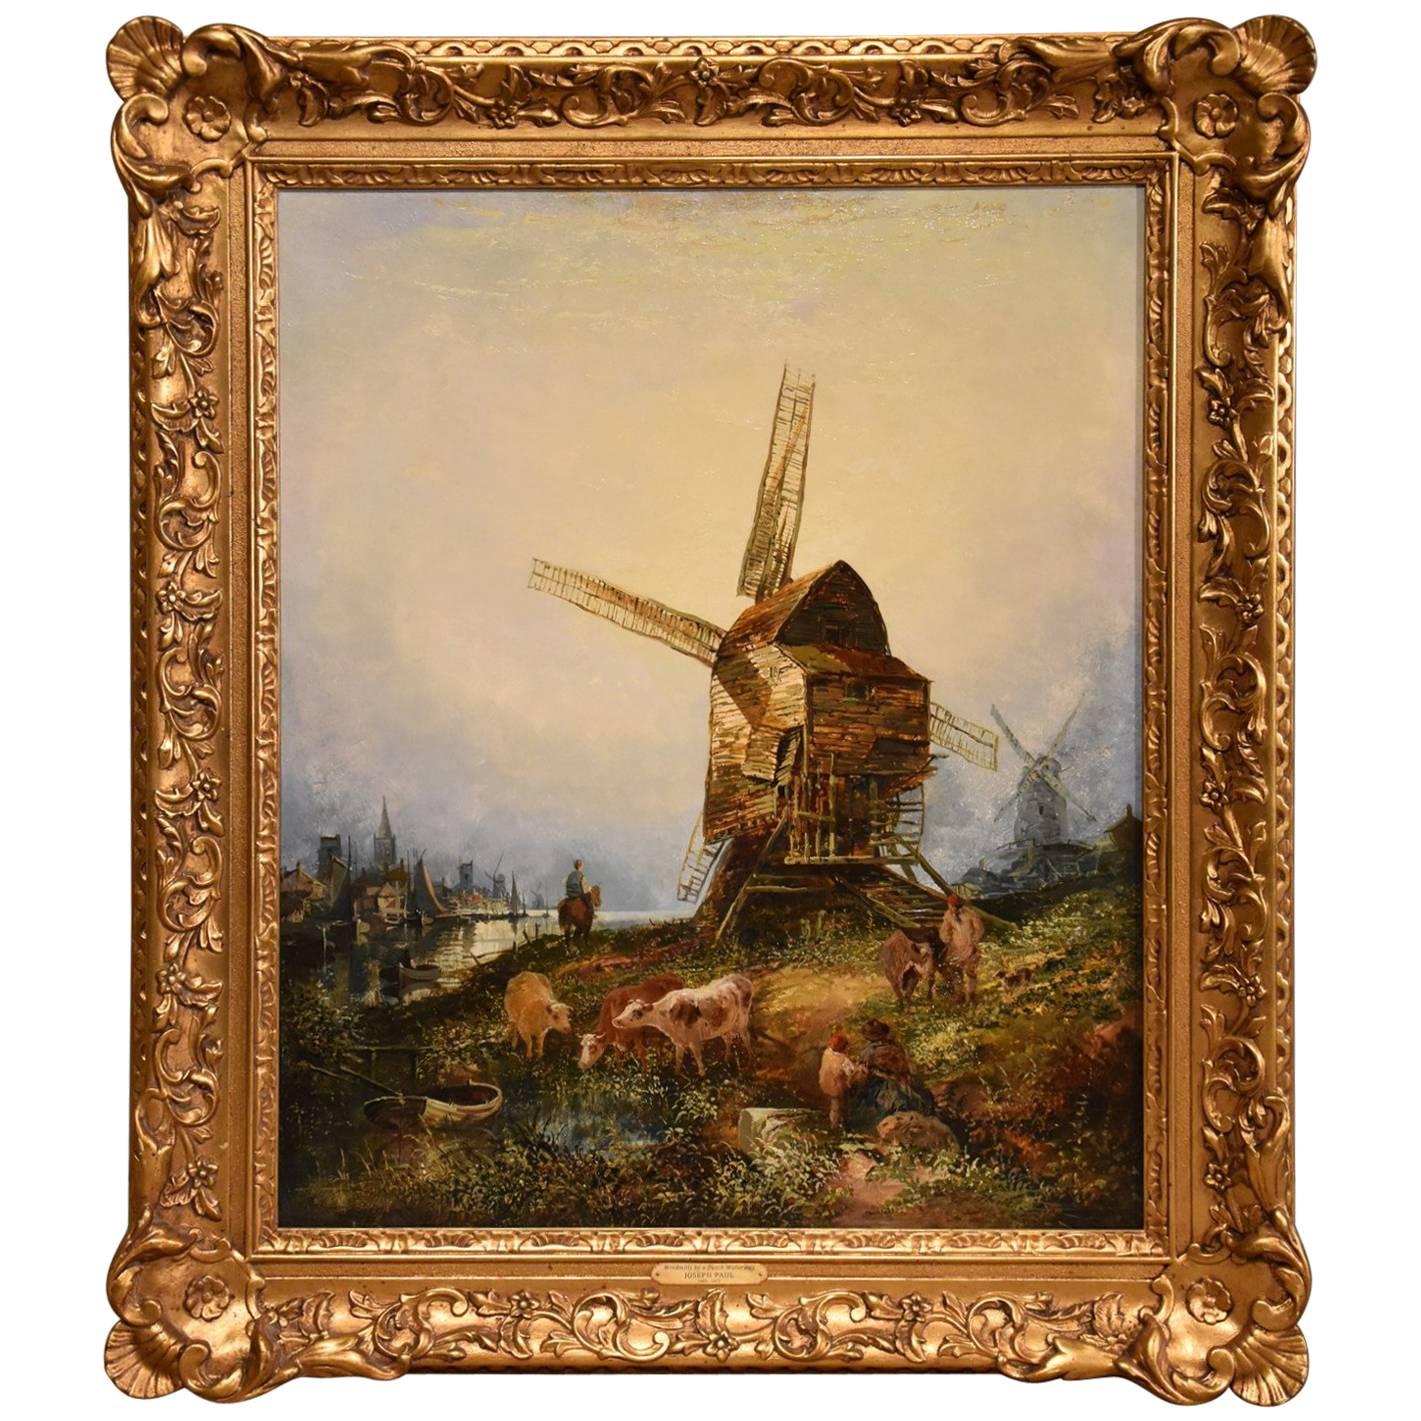 "Windmills by a Dutch Waterway" by Joseph Paul For Sale